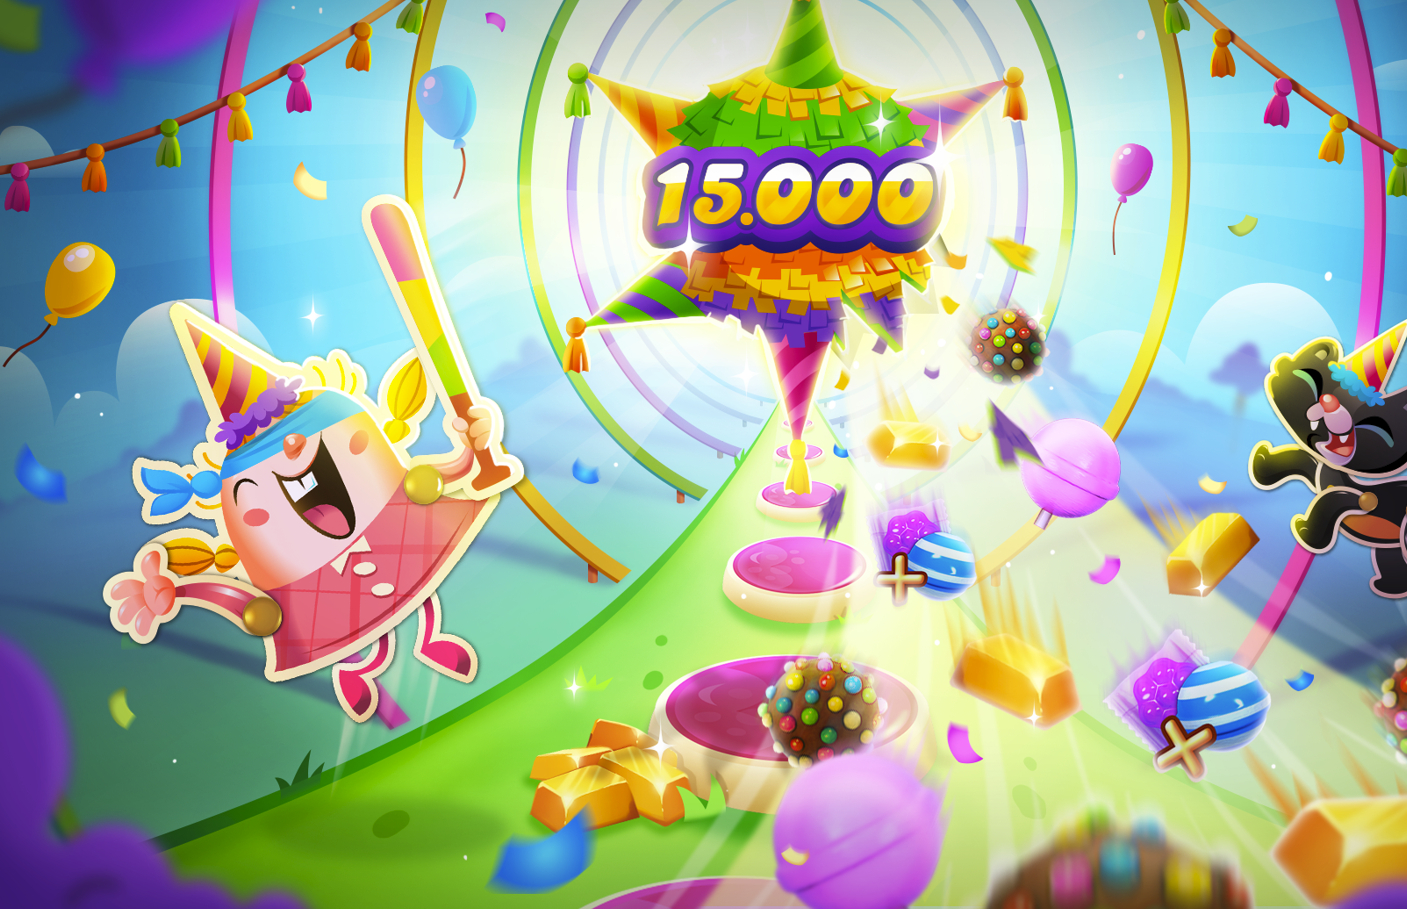 King celebrates its 20th anniversary as Candy Crush Saga reaches its  15,000th level